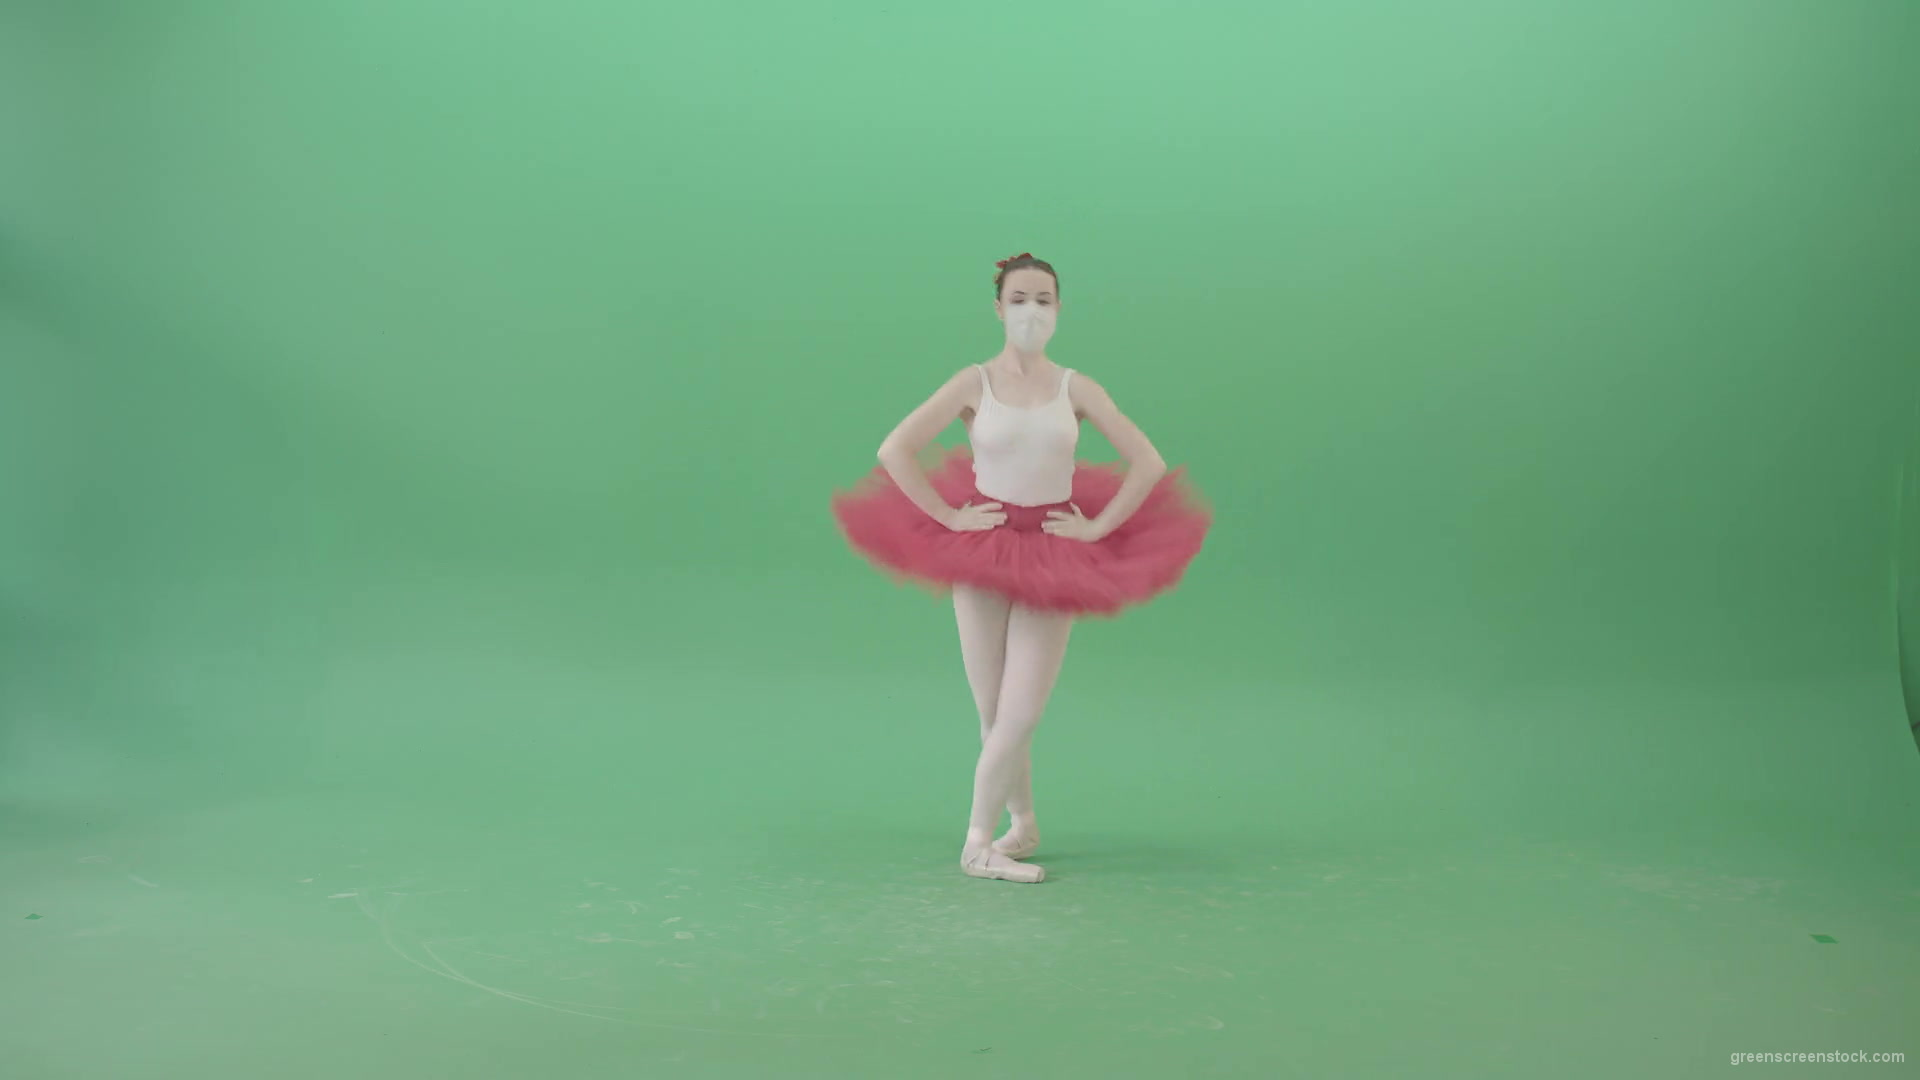 Ballet-Girl-in-Corona-Virus-Mask-Jumping-like-ballerina-isolated-on-green-screen-4K-Video-Footage-1920_005 Green Screen Stock